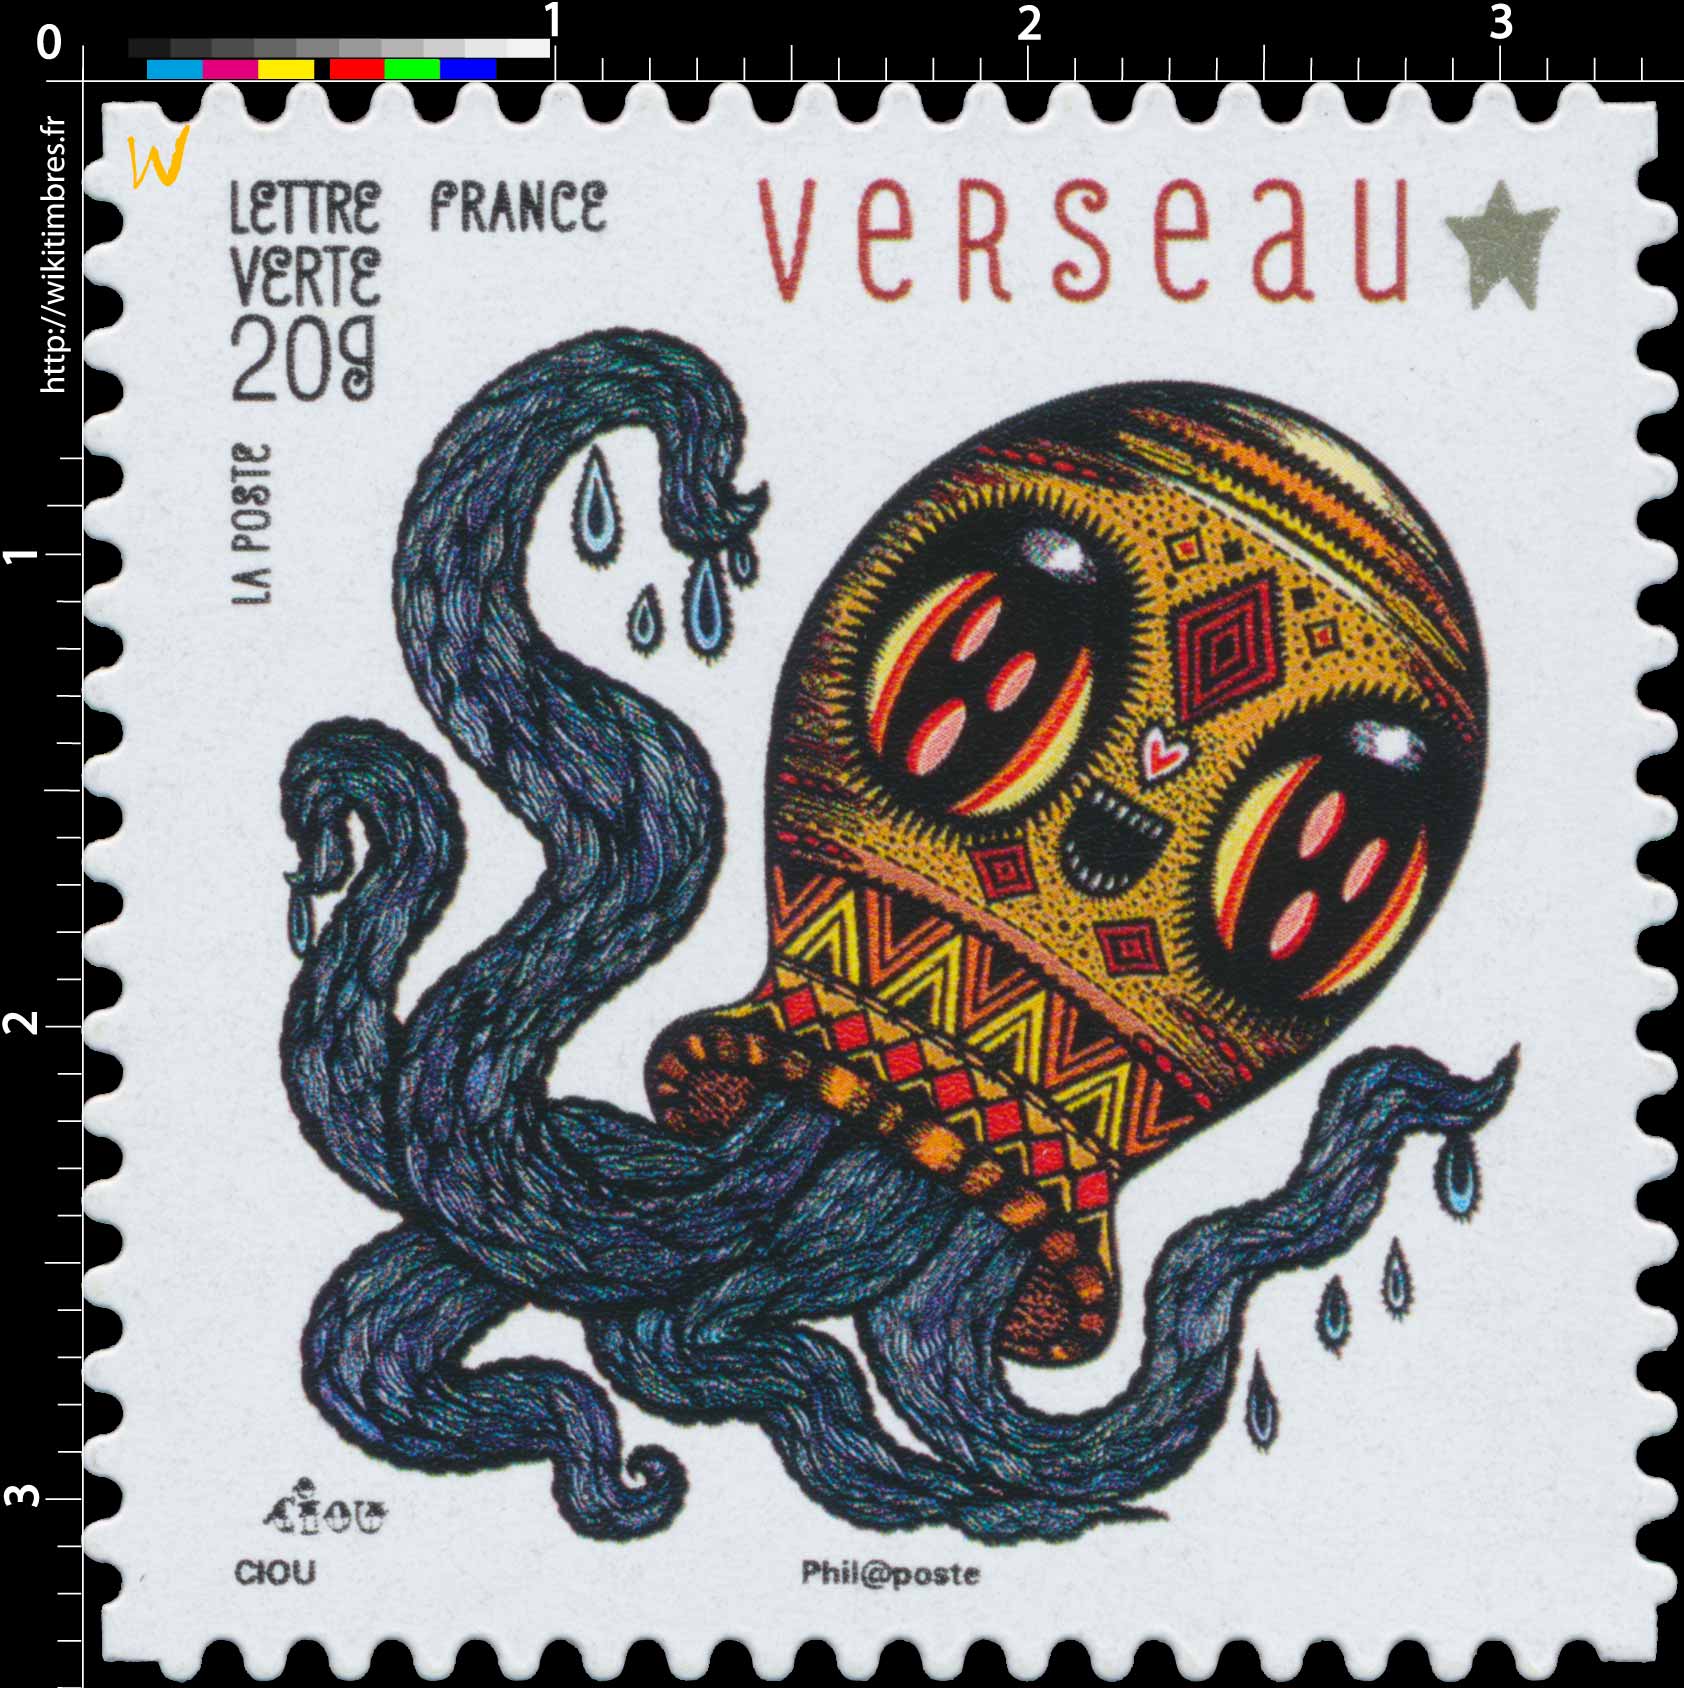 2014 Verseau